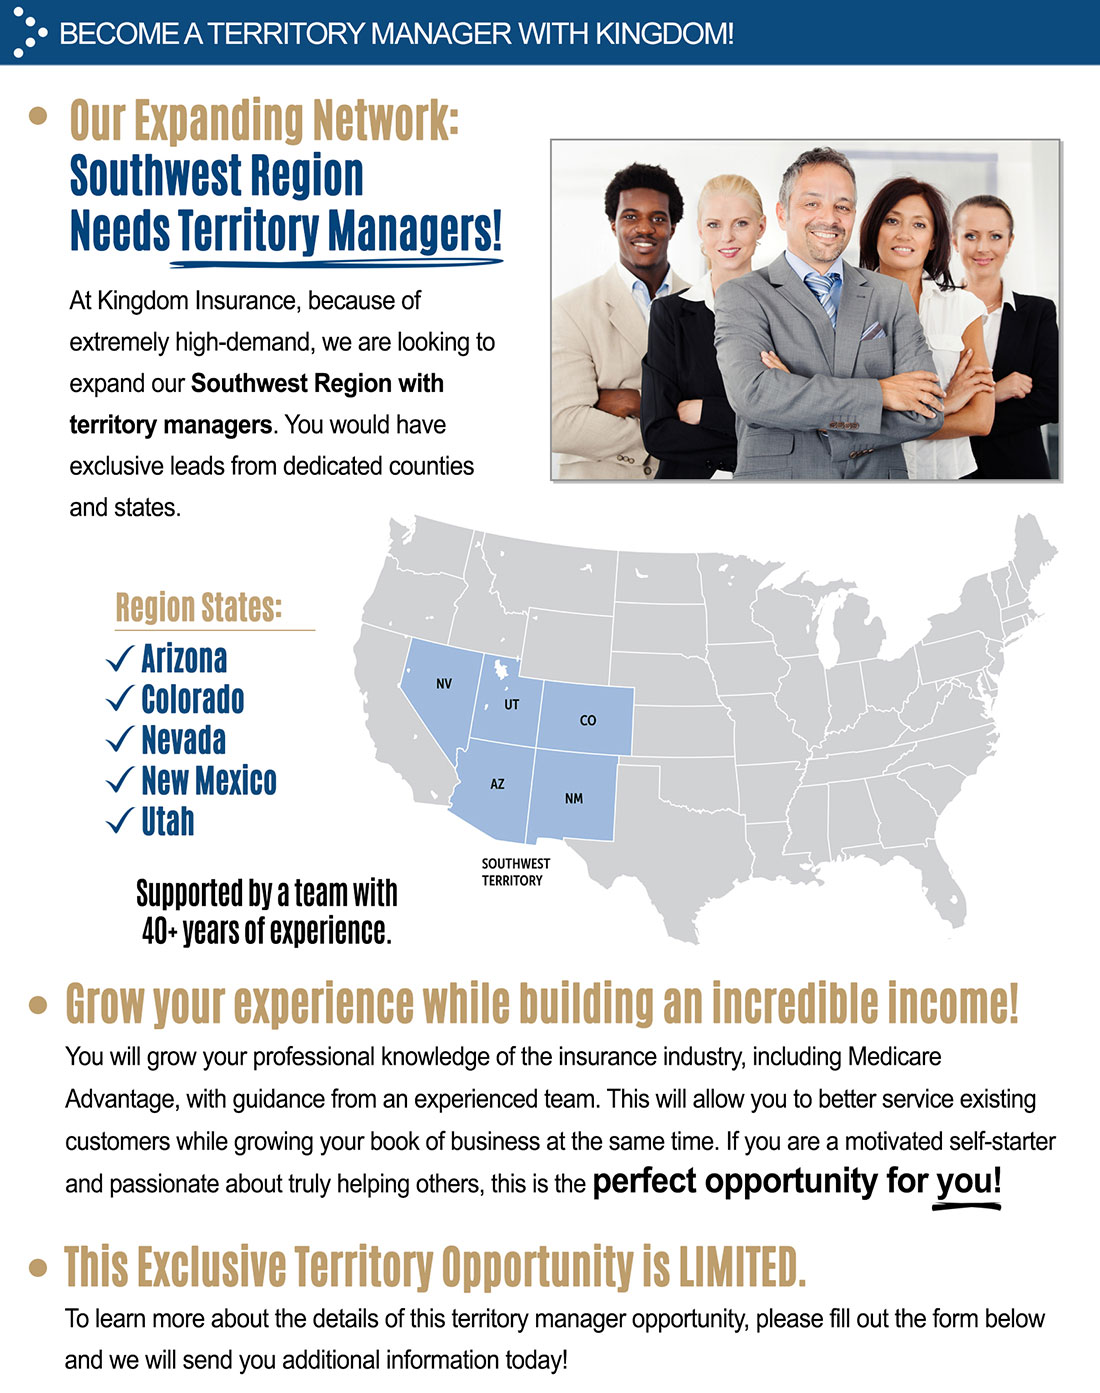 Southwest Region needs territory managers!